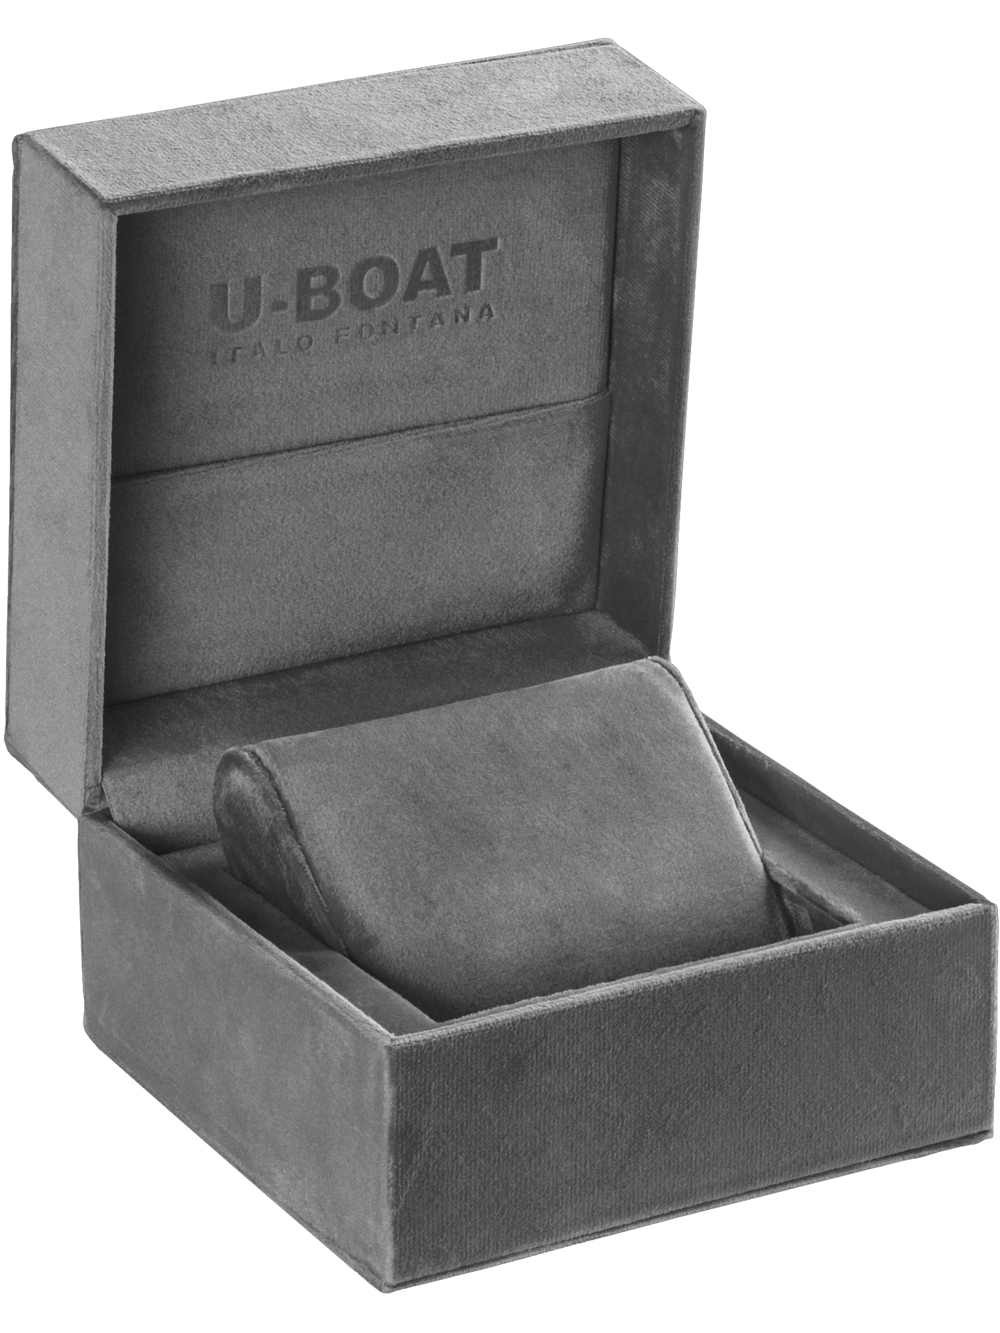 Zegarek męski U-Boat 9018